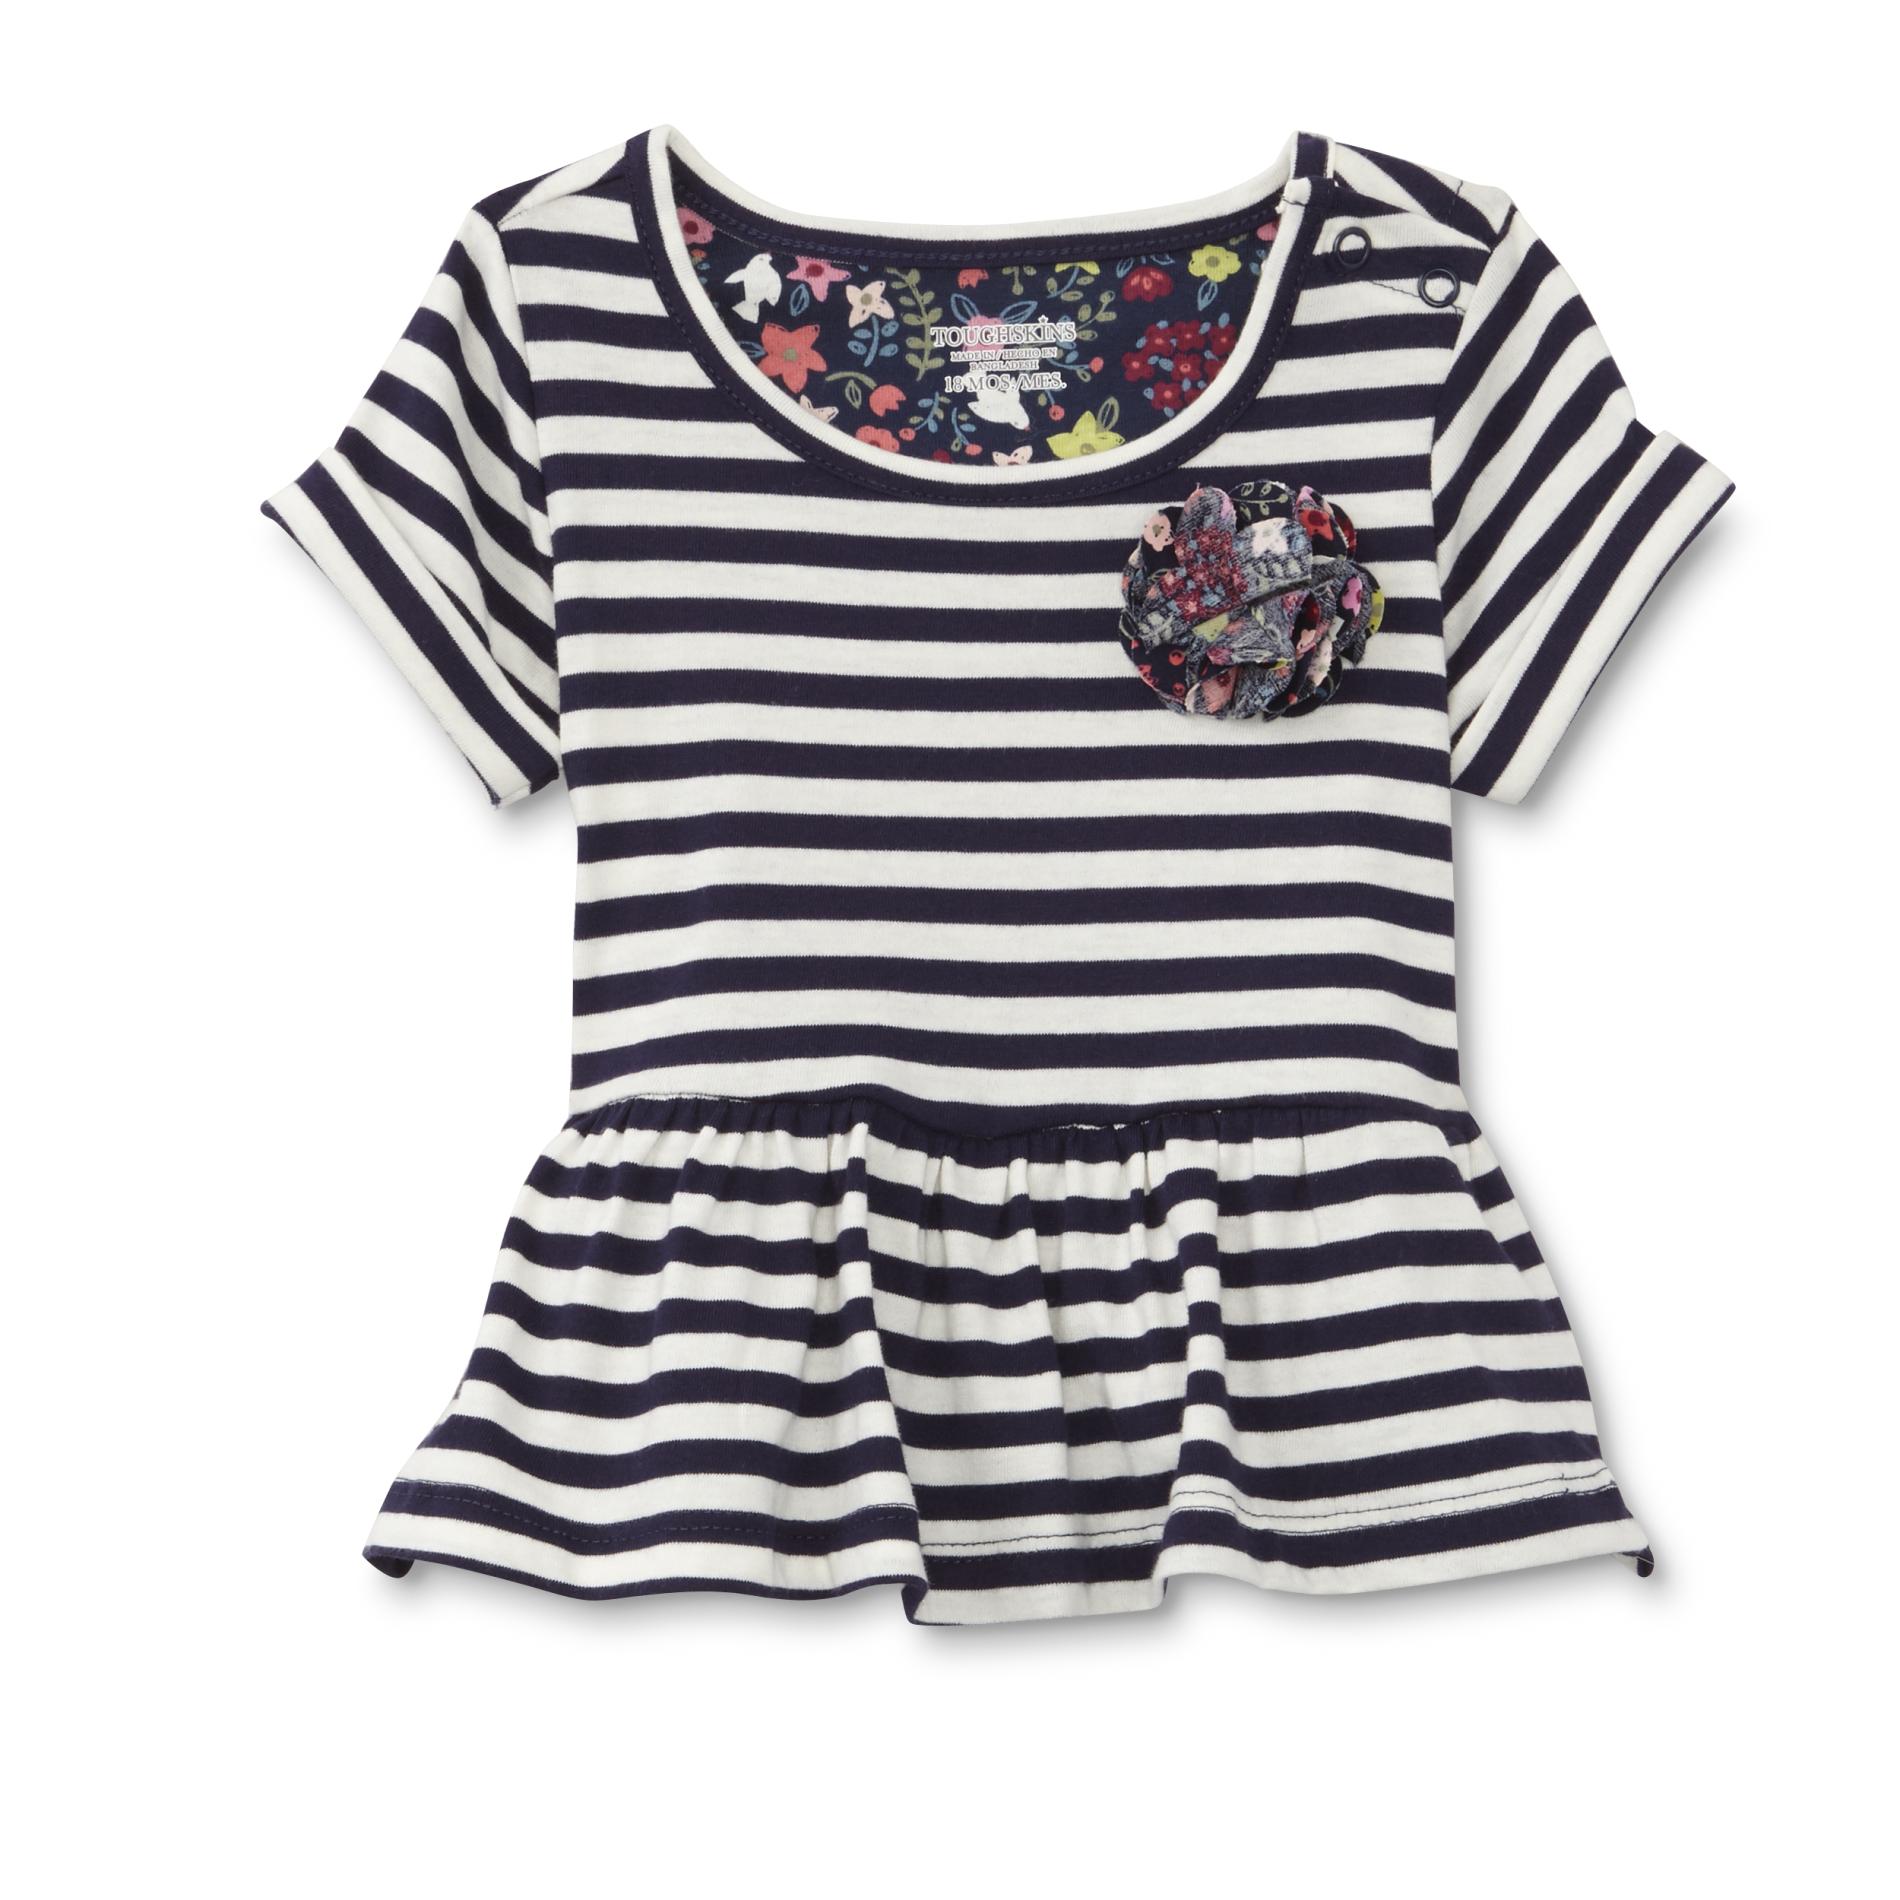 Toughskins Infant & Toddler Girl's Peplum Top - Striped